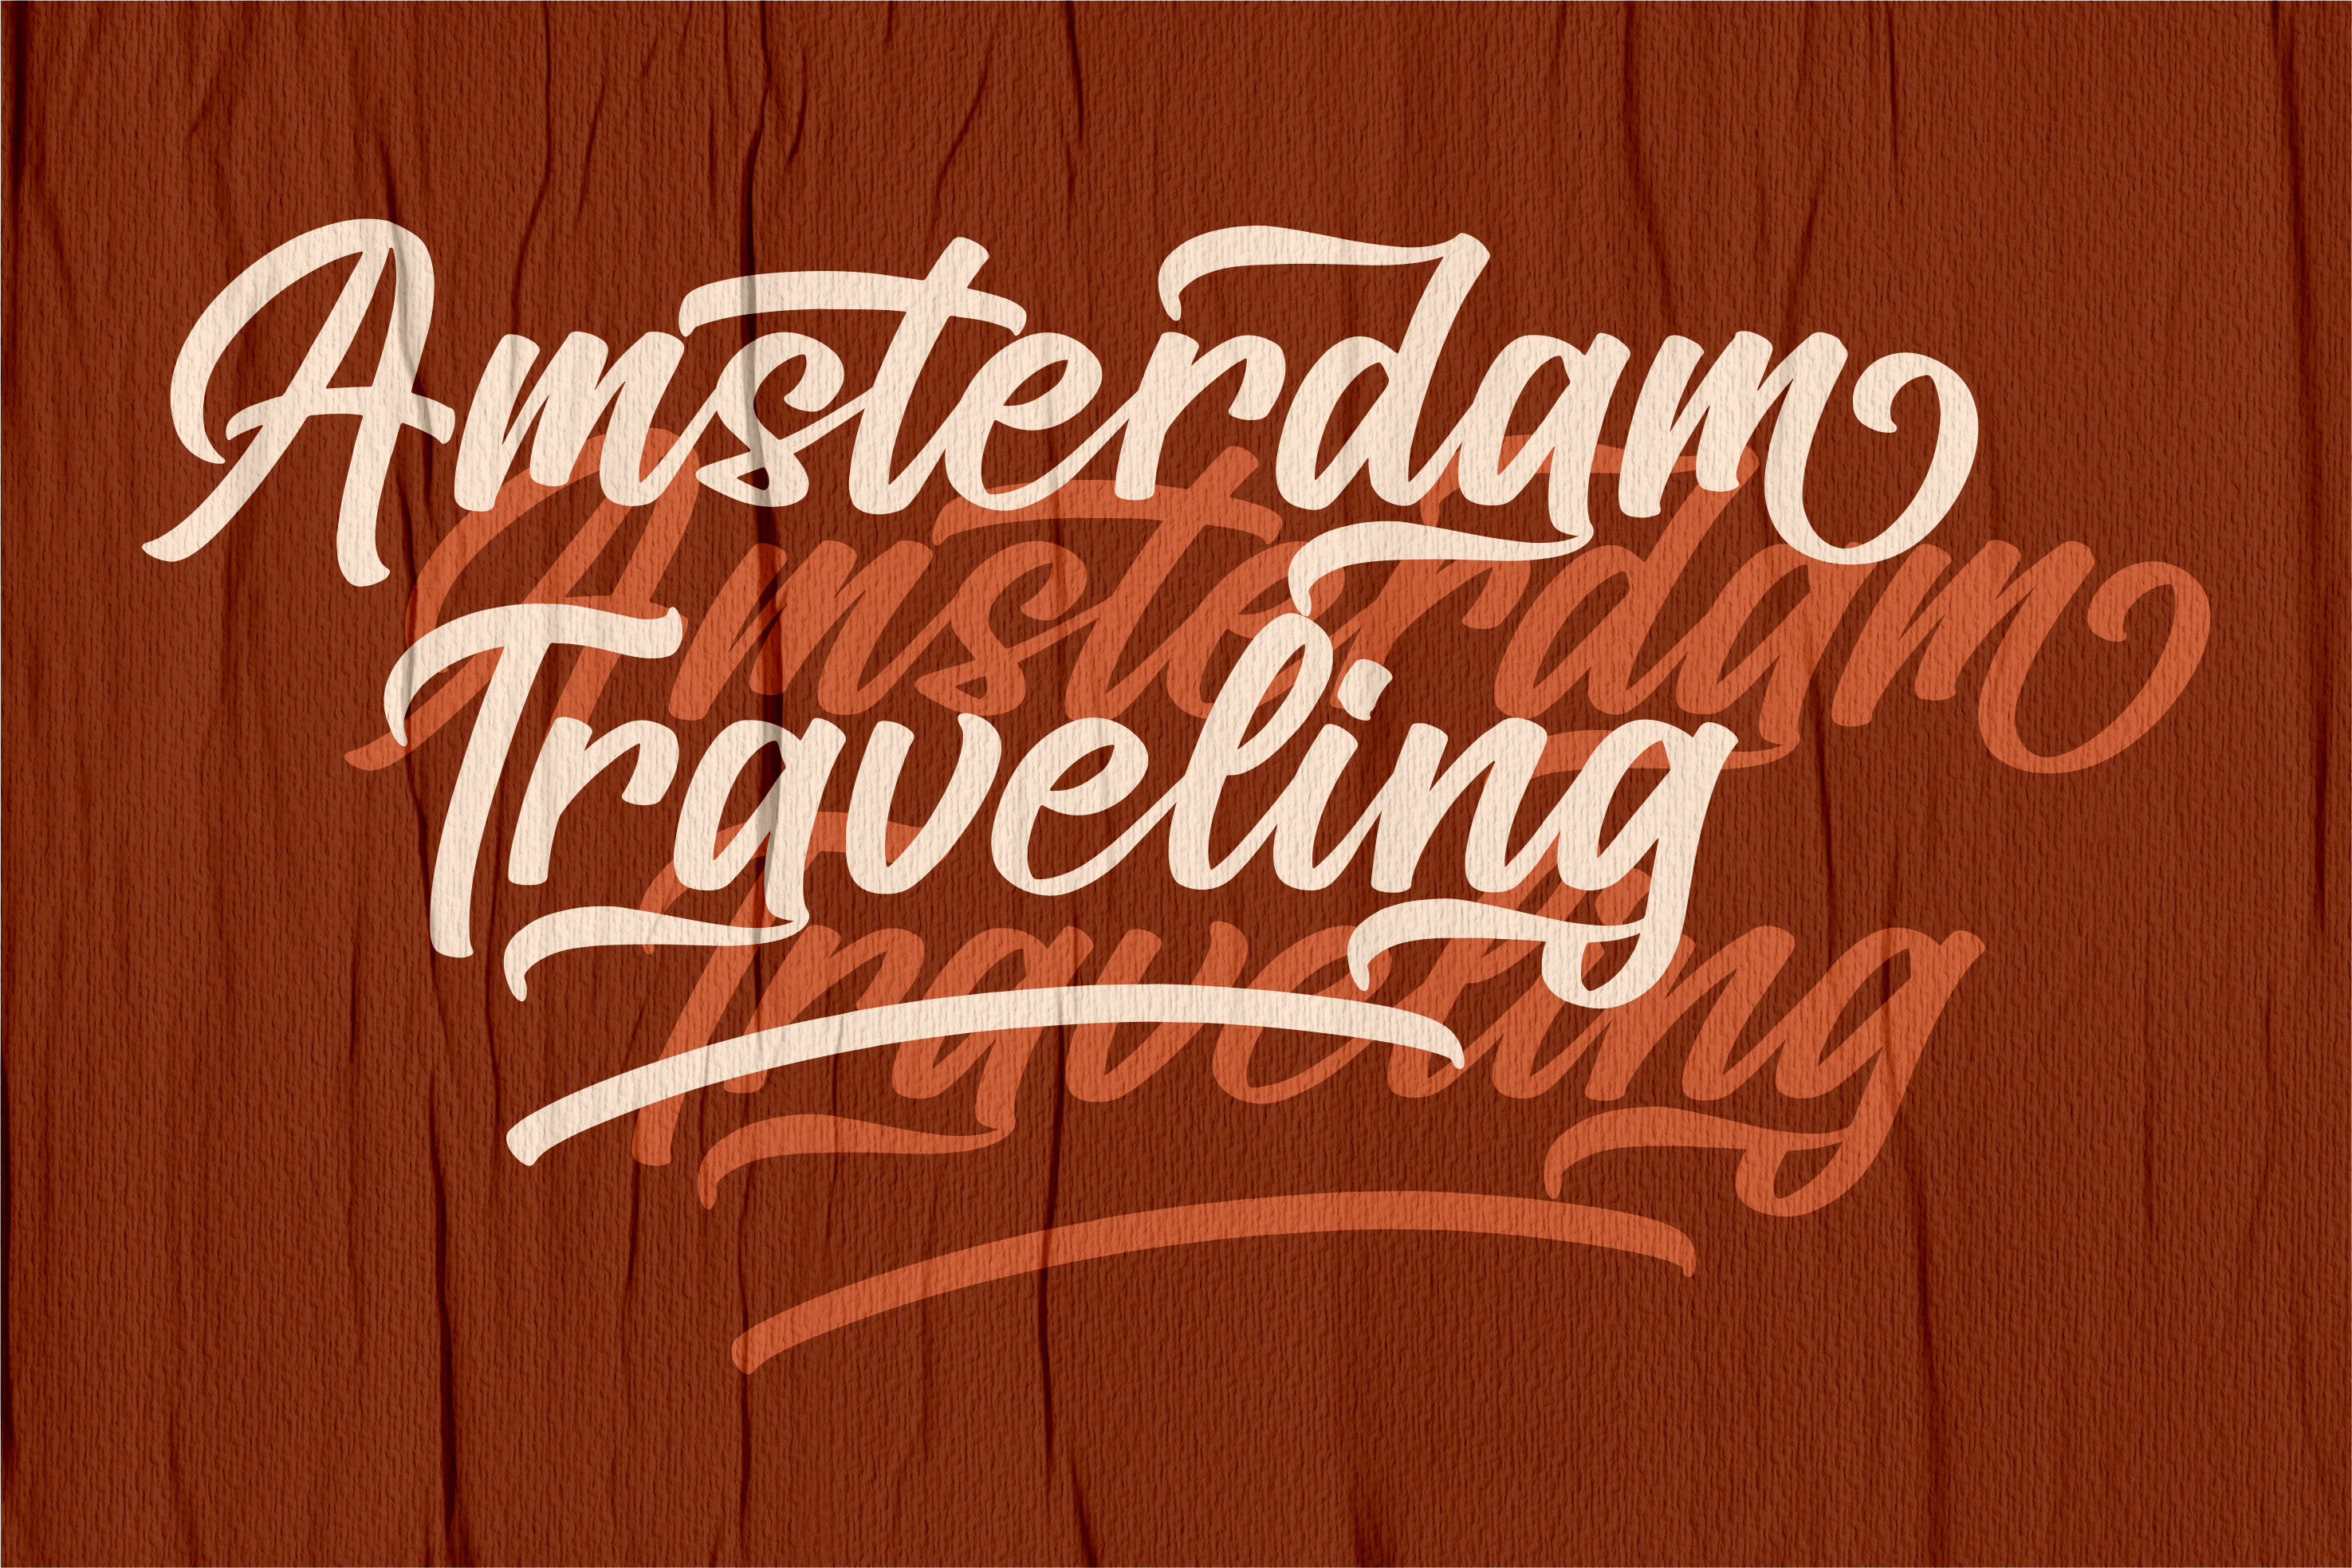 Amsterdam Traveling